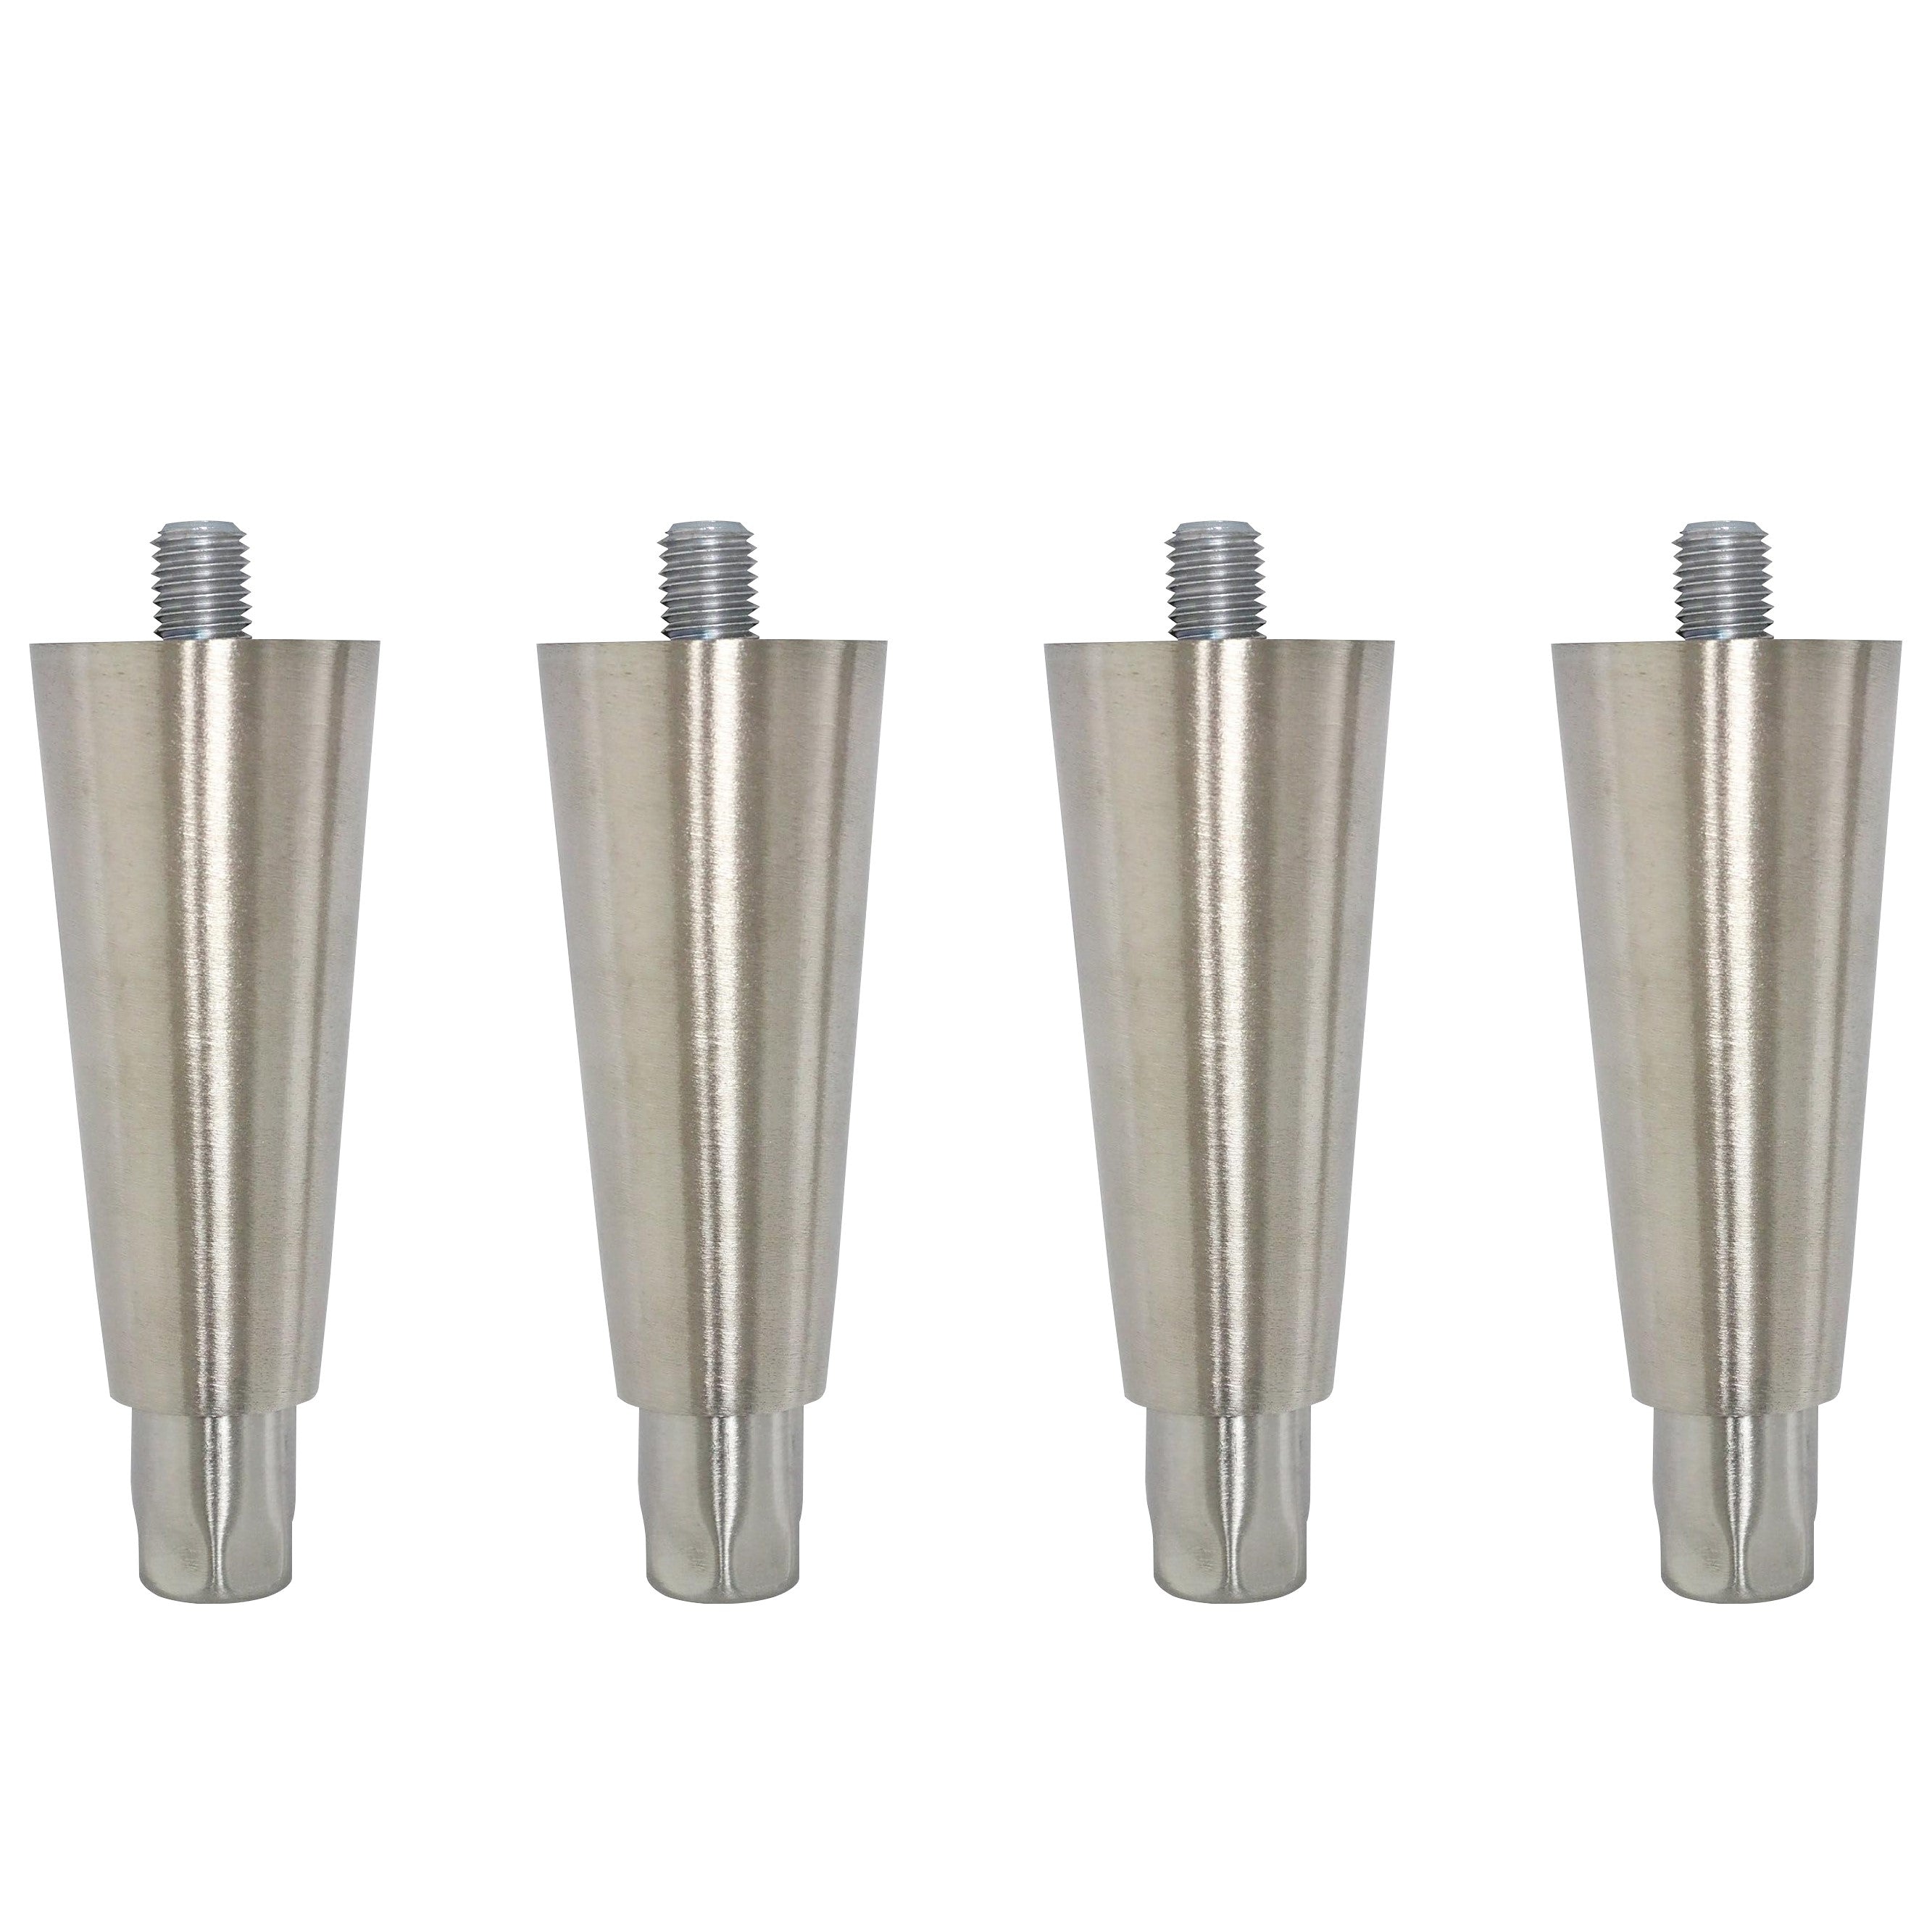 KASON Threaded Steel Stud 6” Adjustable Equipment Leg / Foot for Industrial Commercial Equipment Stands